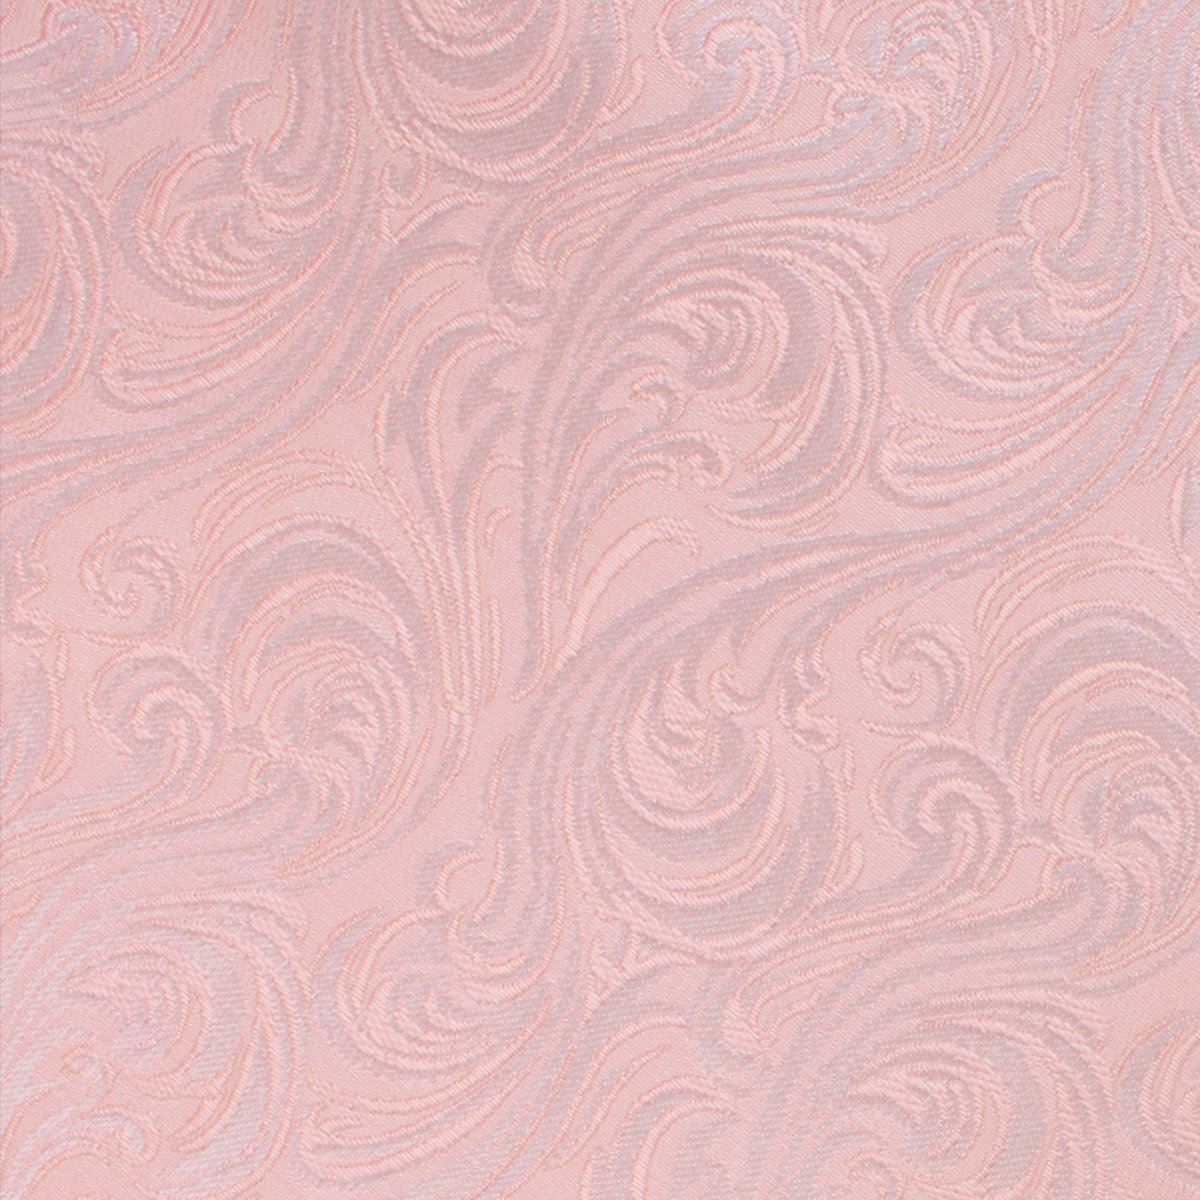 Blush Pink Khamsin Fabric Swatch